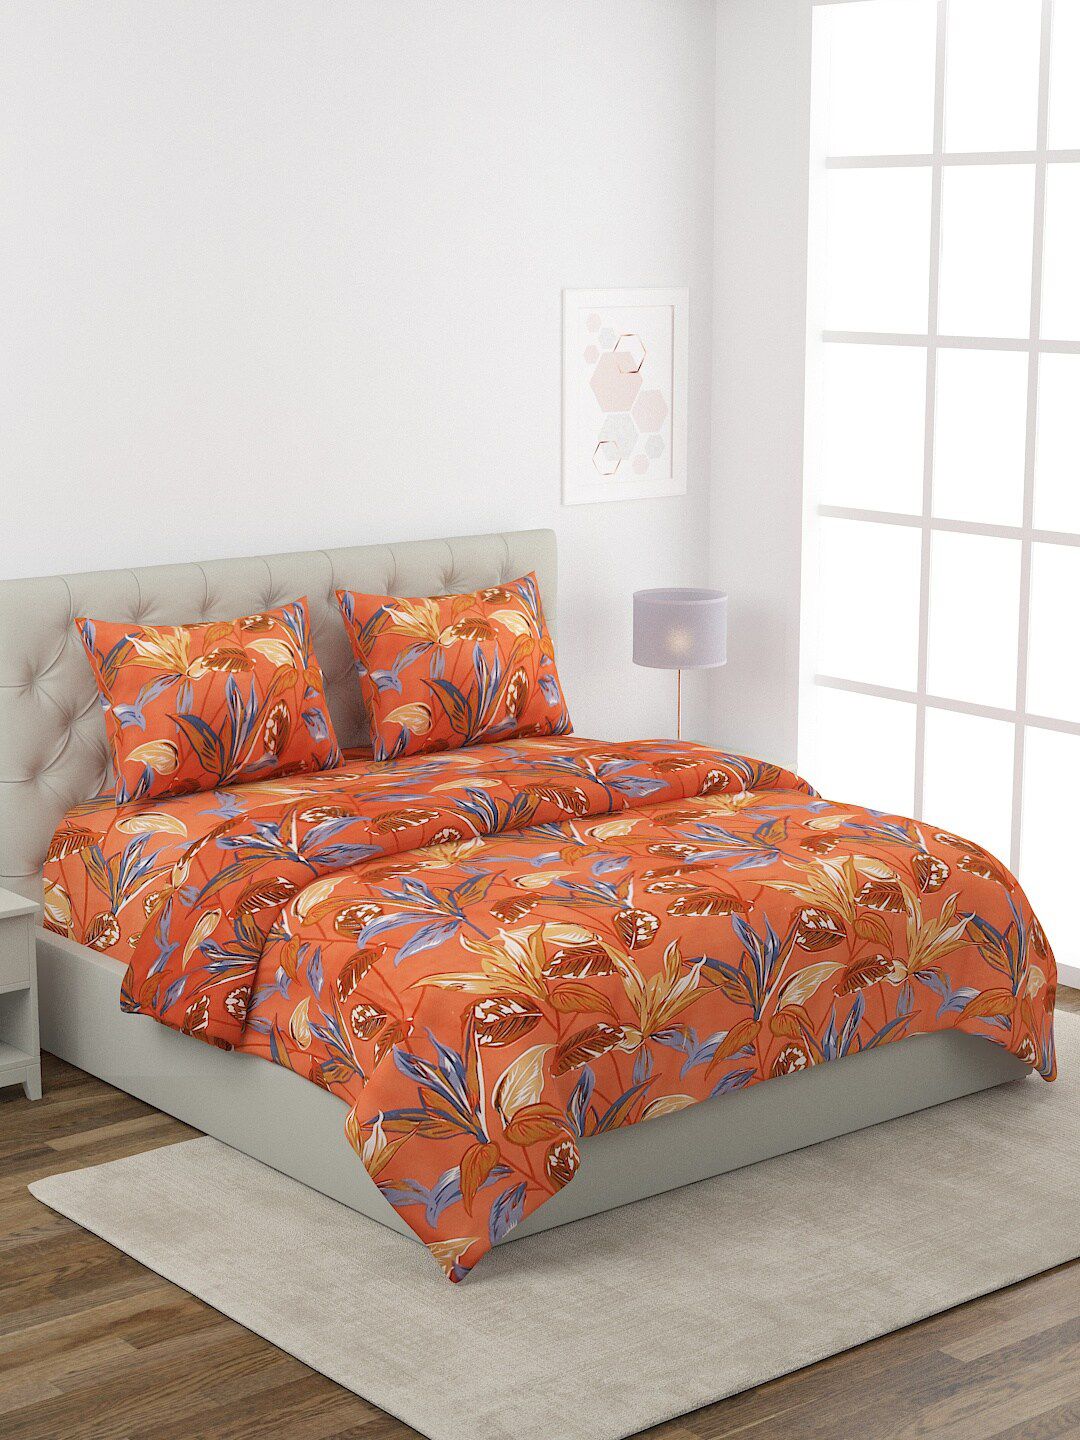 ROMEE Orange & Blue Floral Printed Pure Cotton Bedding Set Price in India